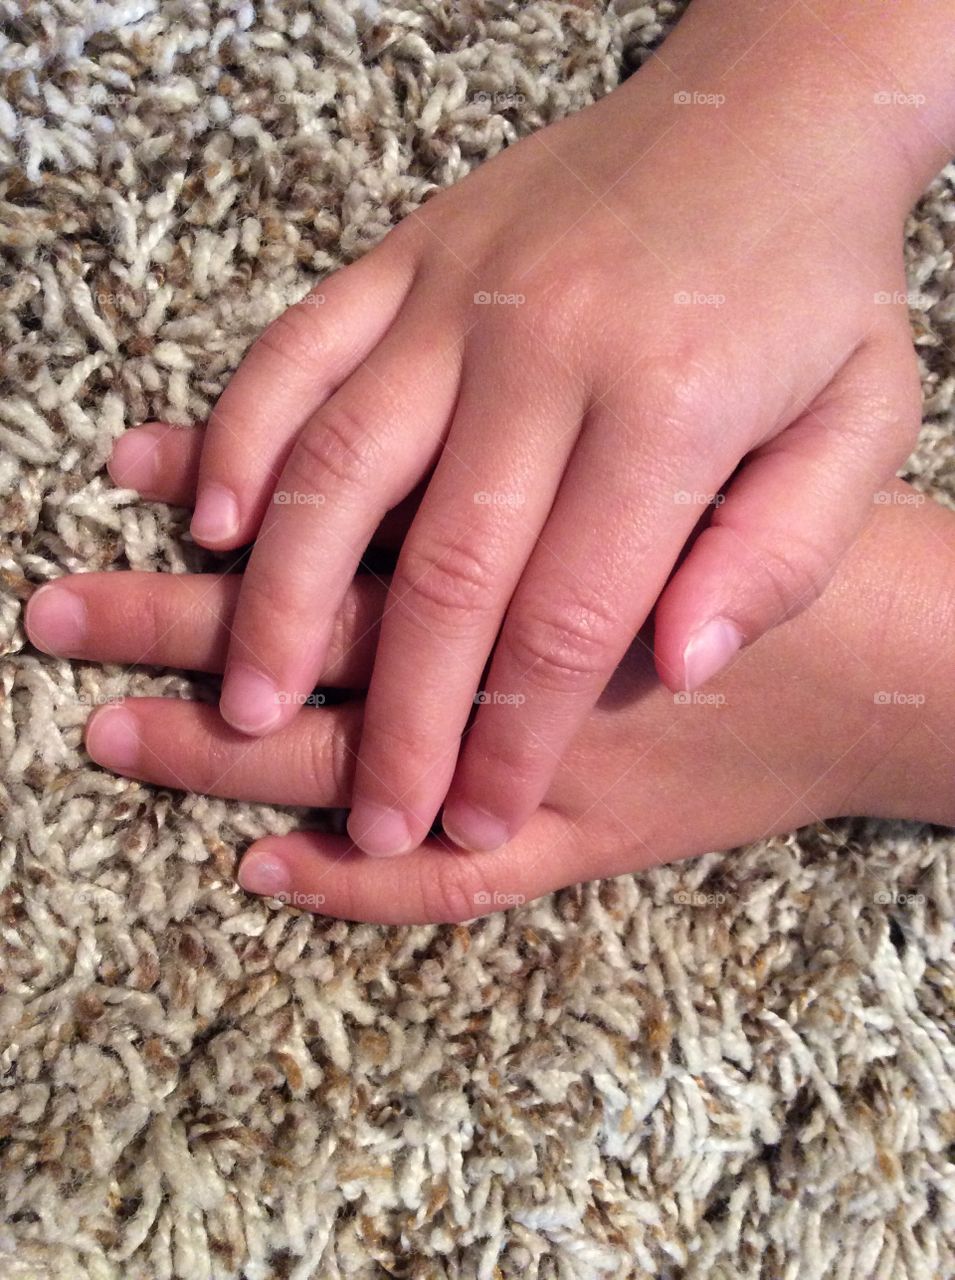 Toddler hands